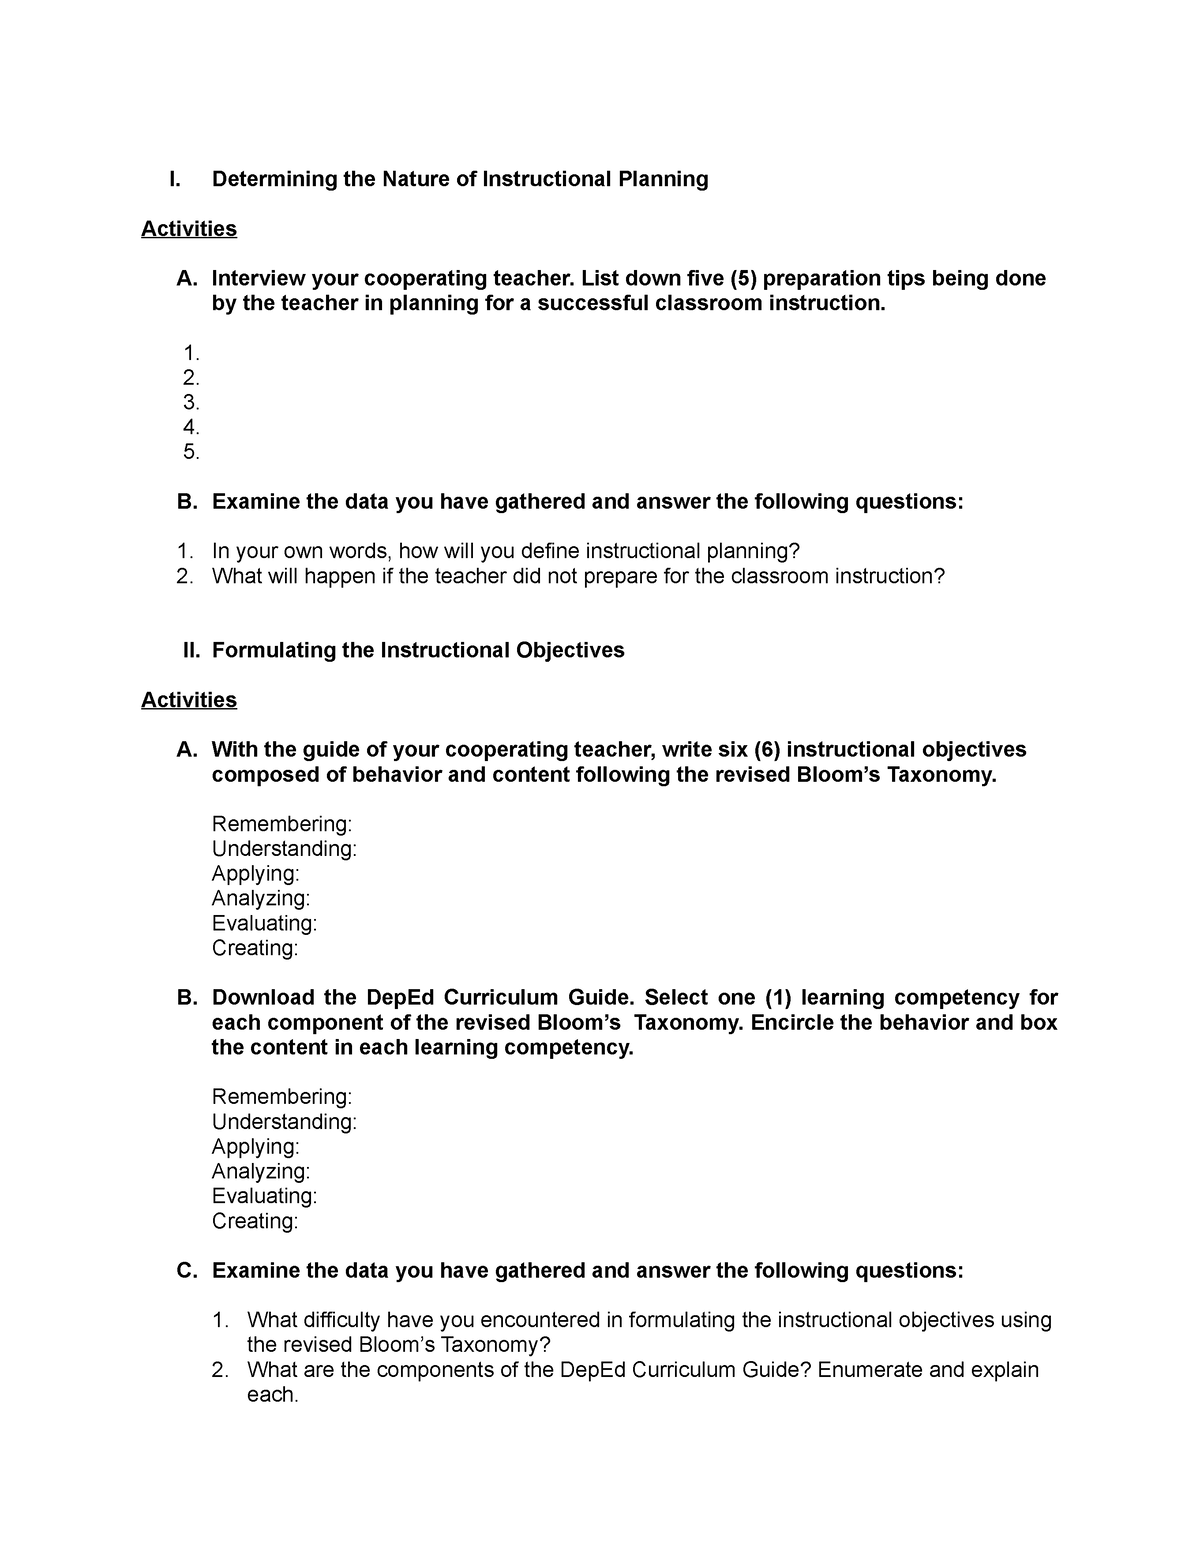 FS 2 Worksheet 1 - Practice teaching - I. Determining the Nature of ...